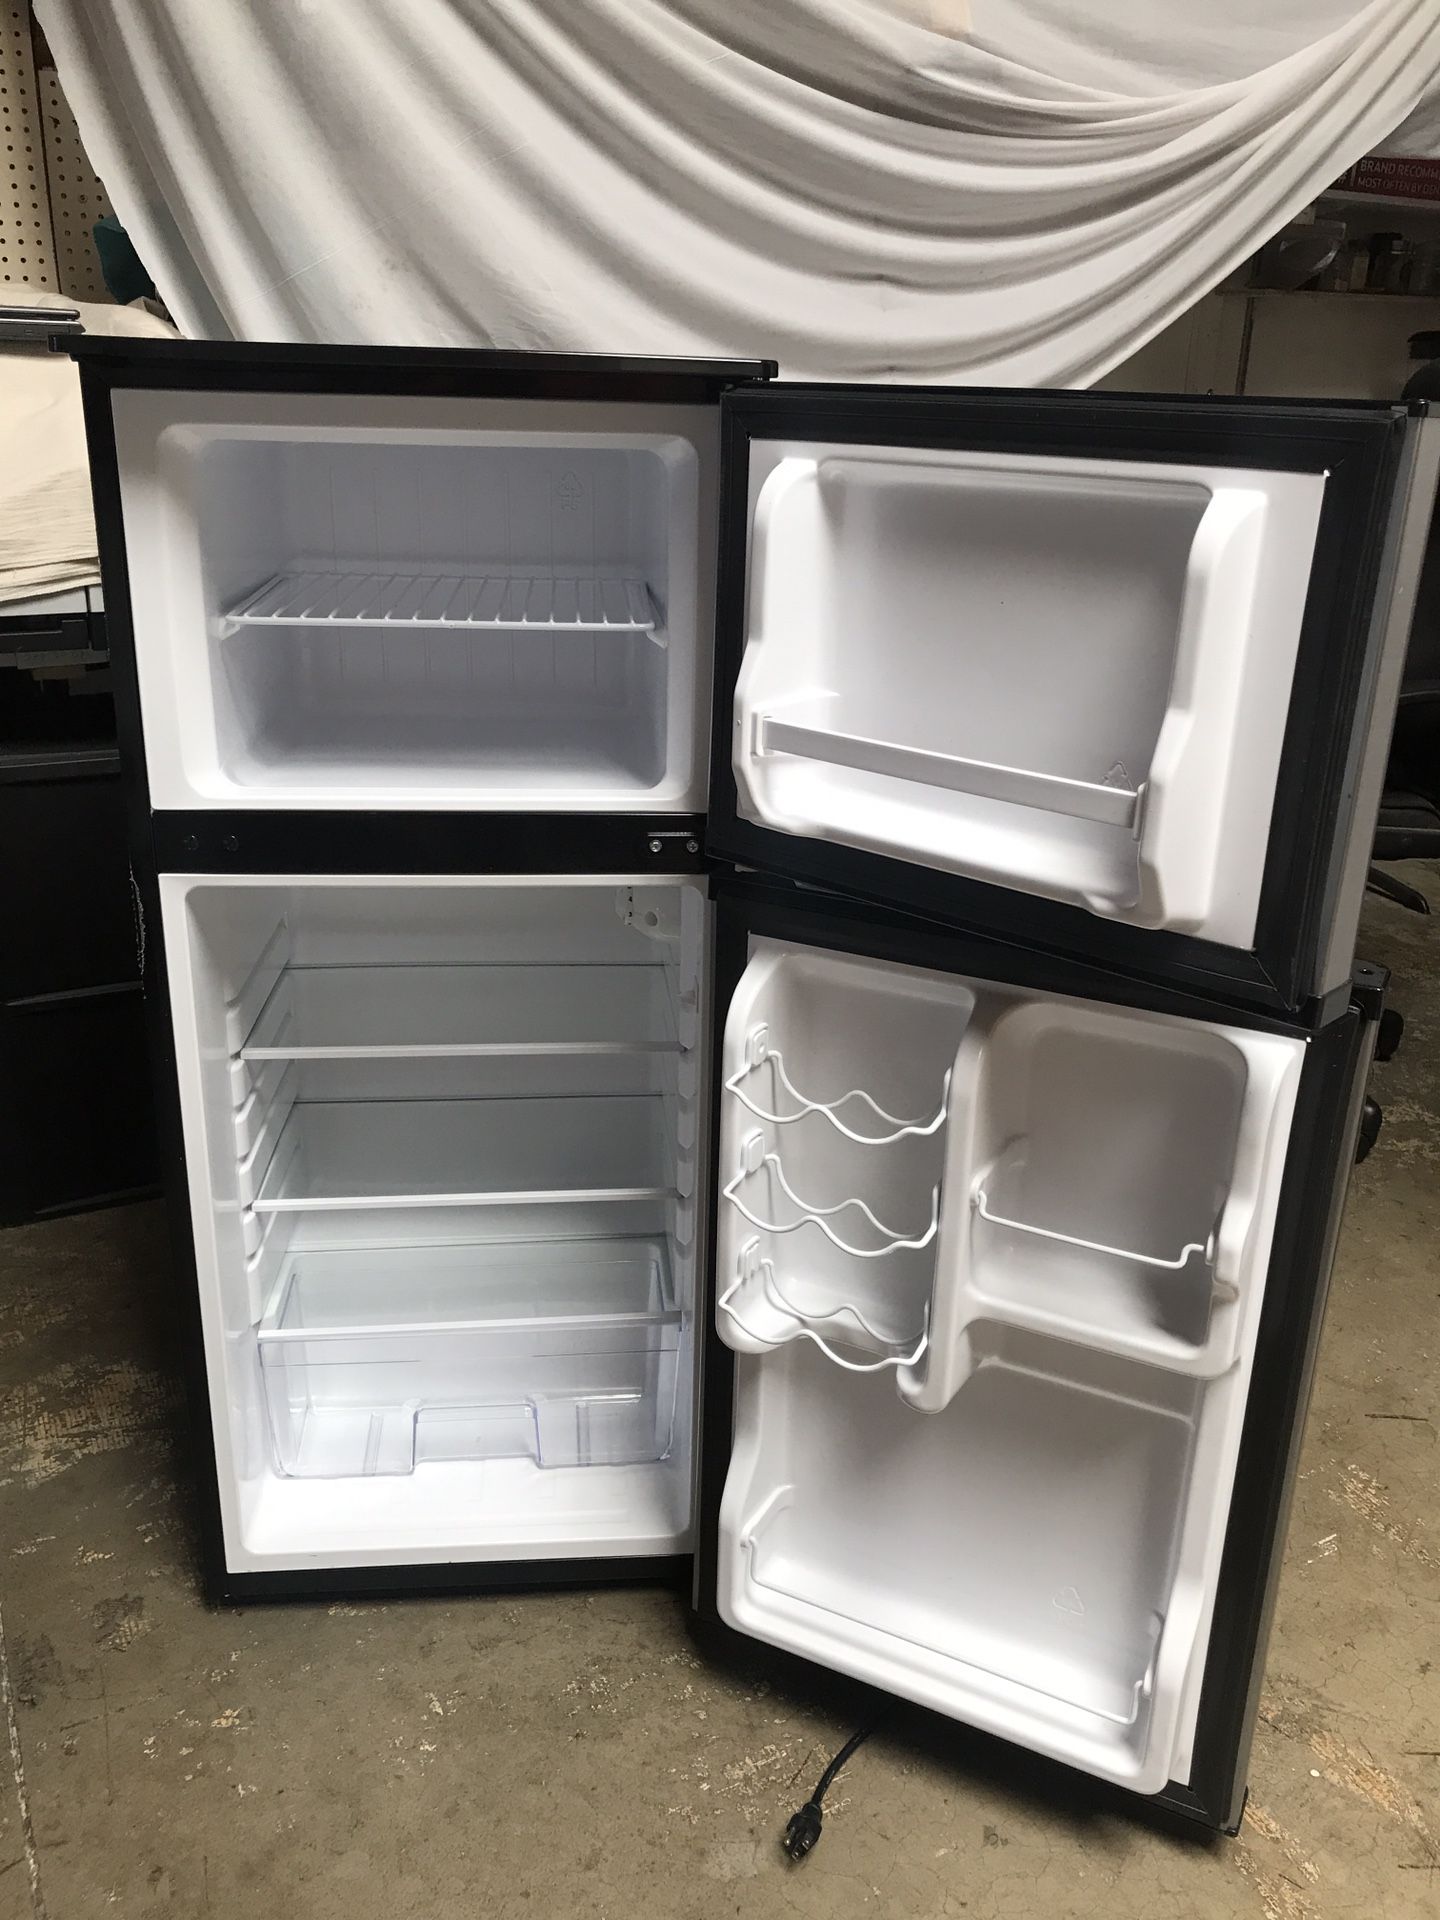 Magic chef mini fridge 4.3 cu ft